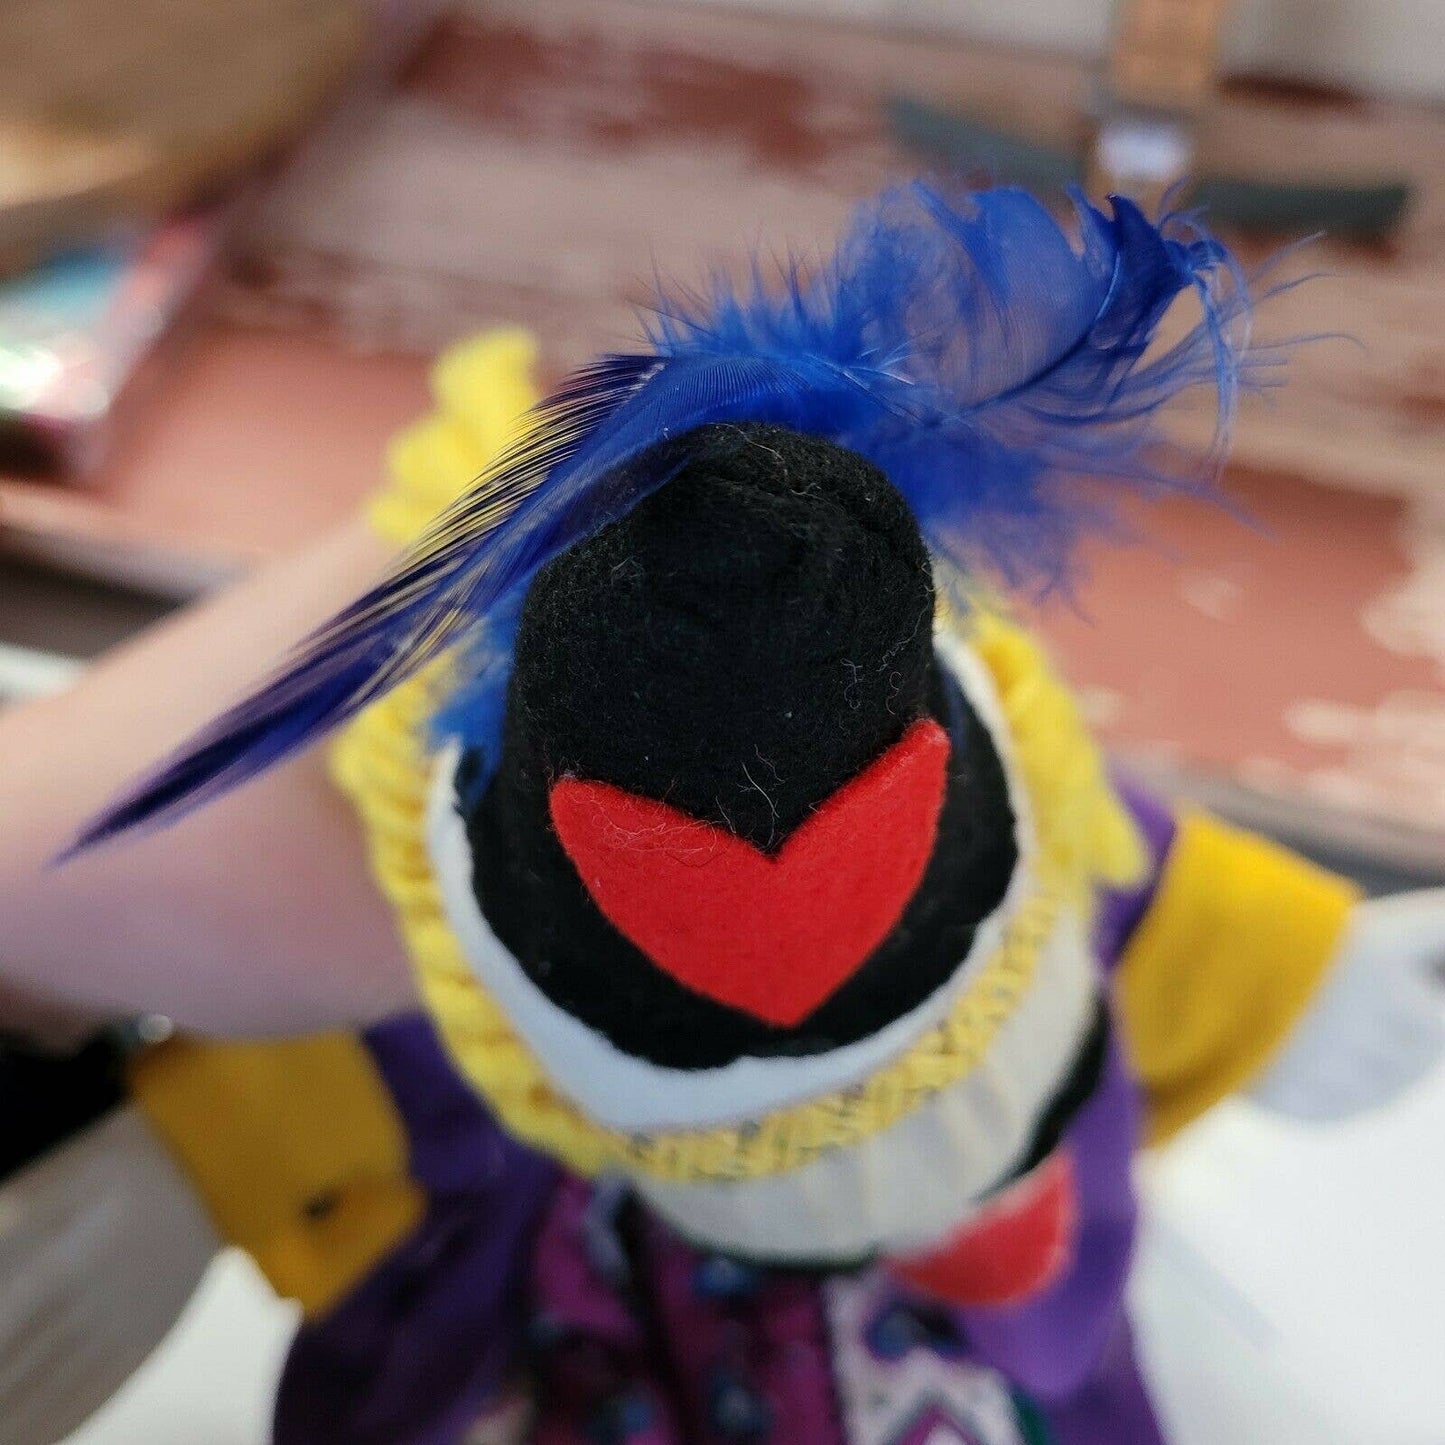 Rare Else Hecht Hand Puppet ~ German Felt Toy Elf Clown Doll w/ tag